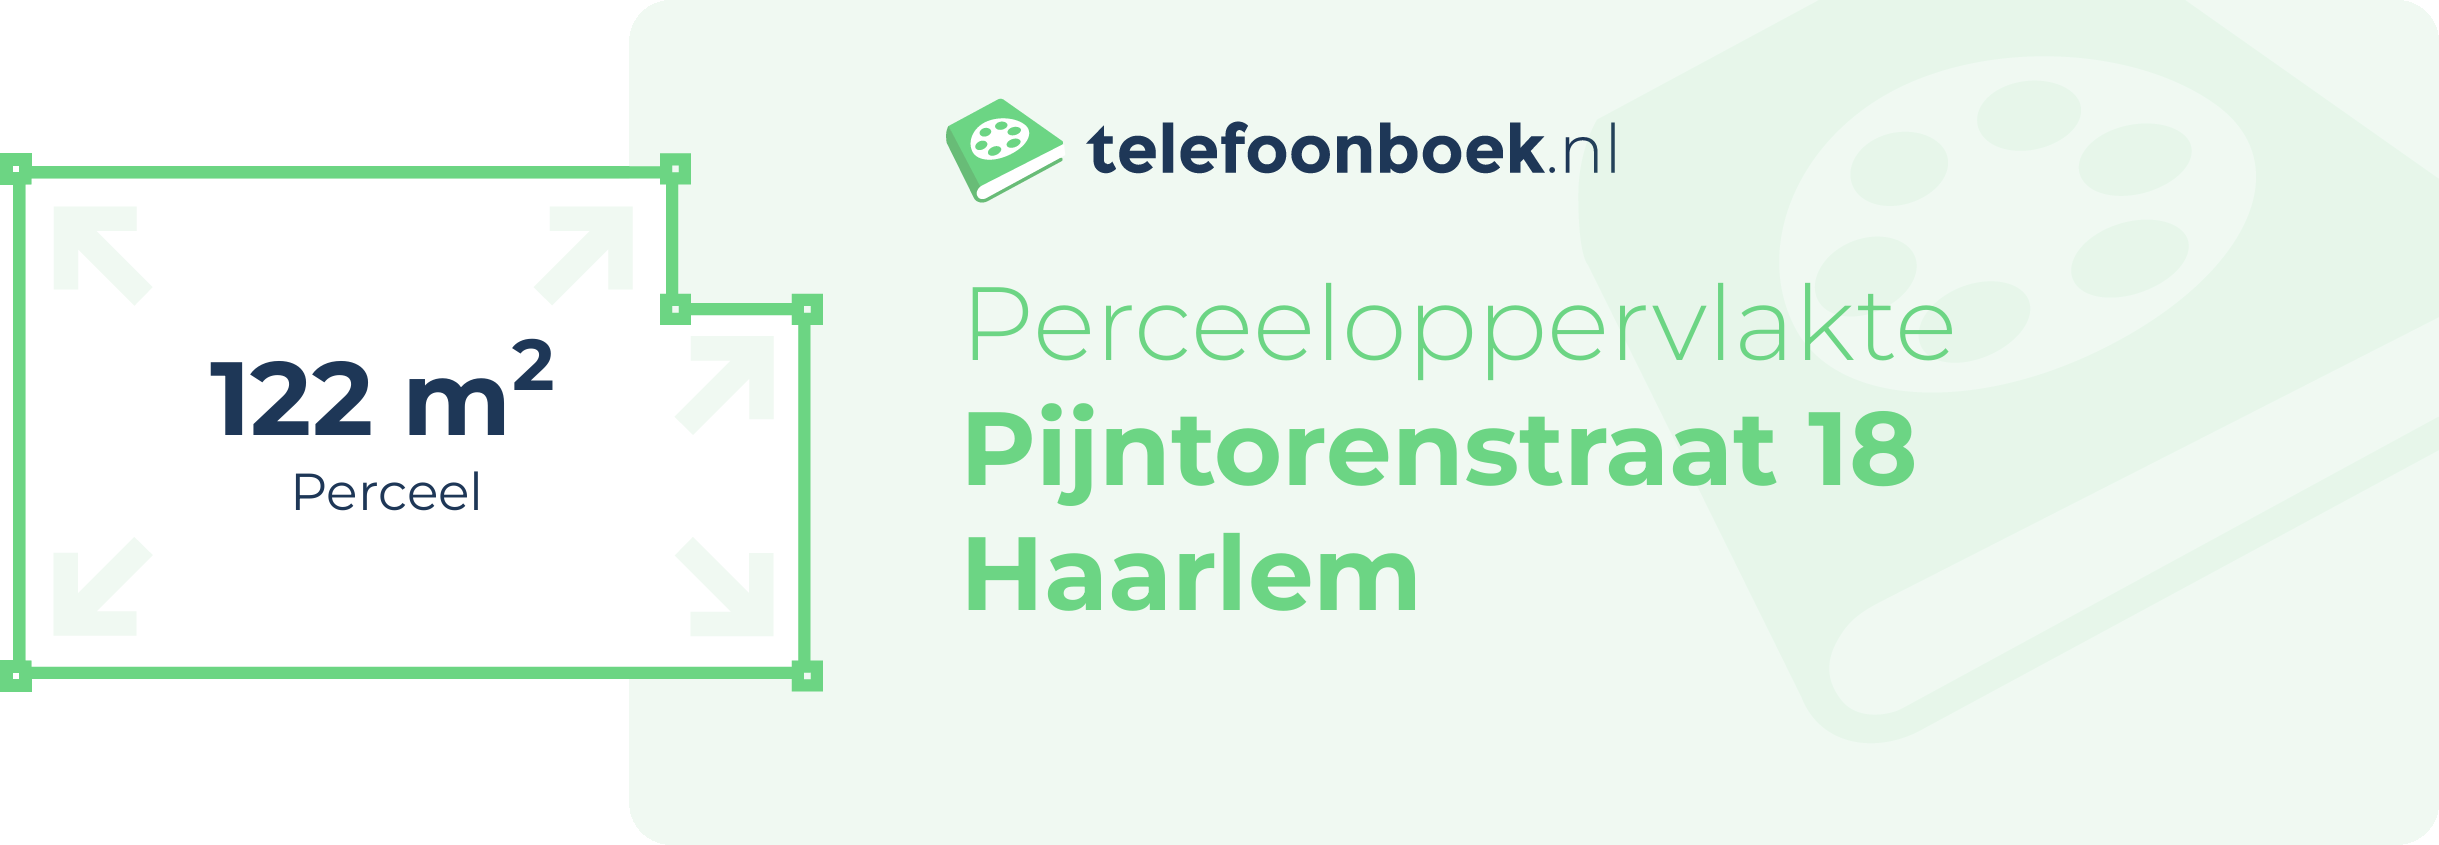 Perceeloppervlakte Pijntorenstraat 18 Haarlem